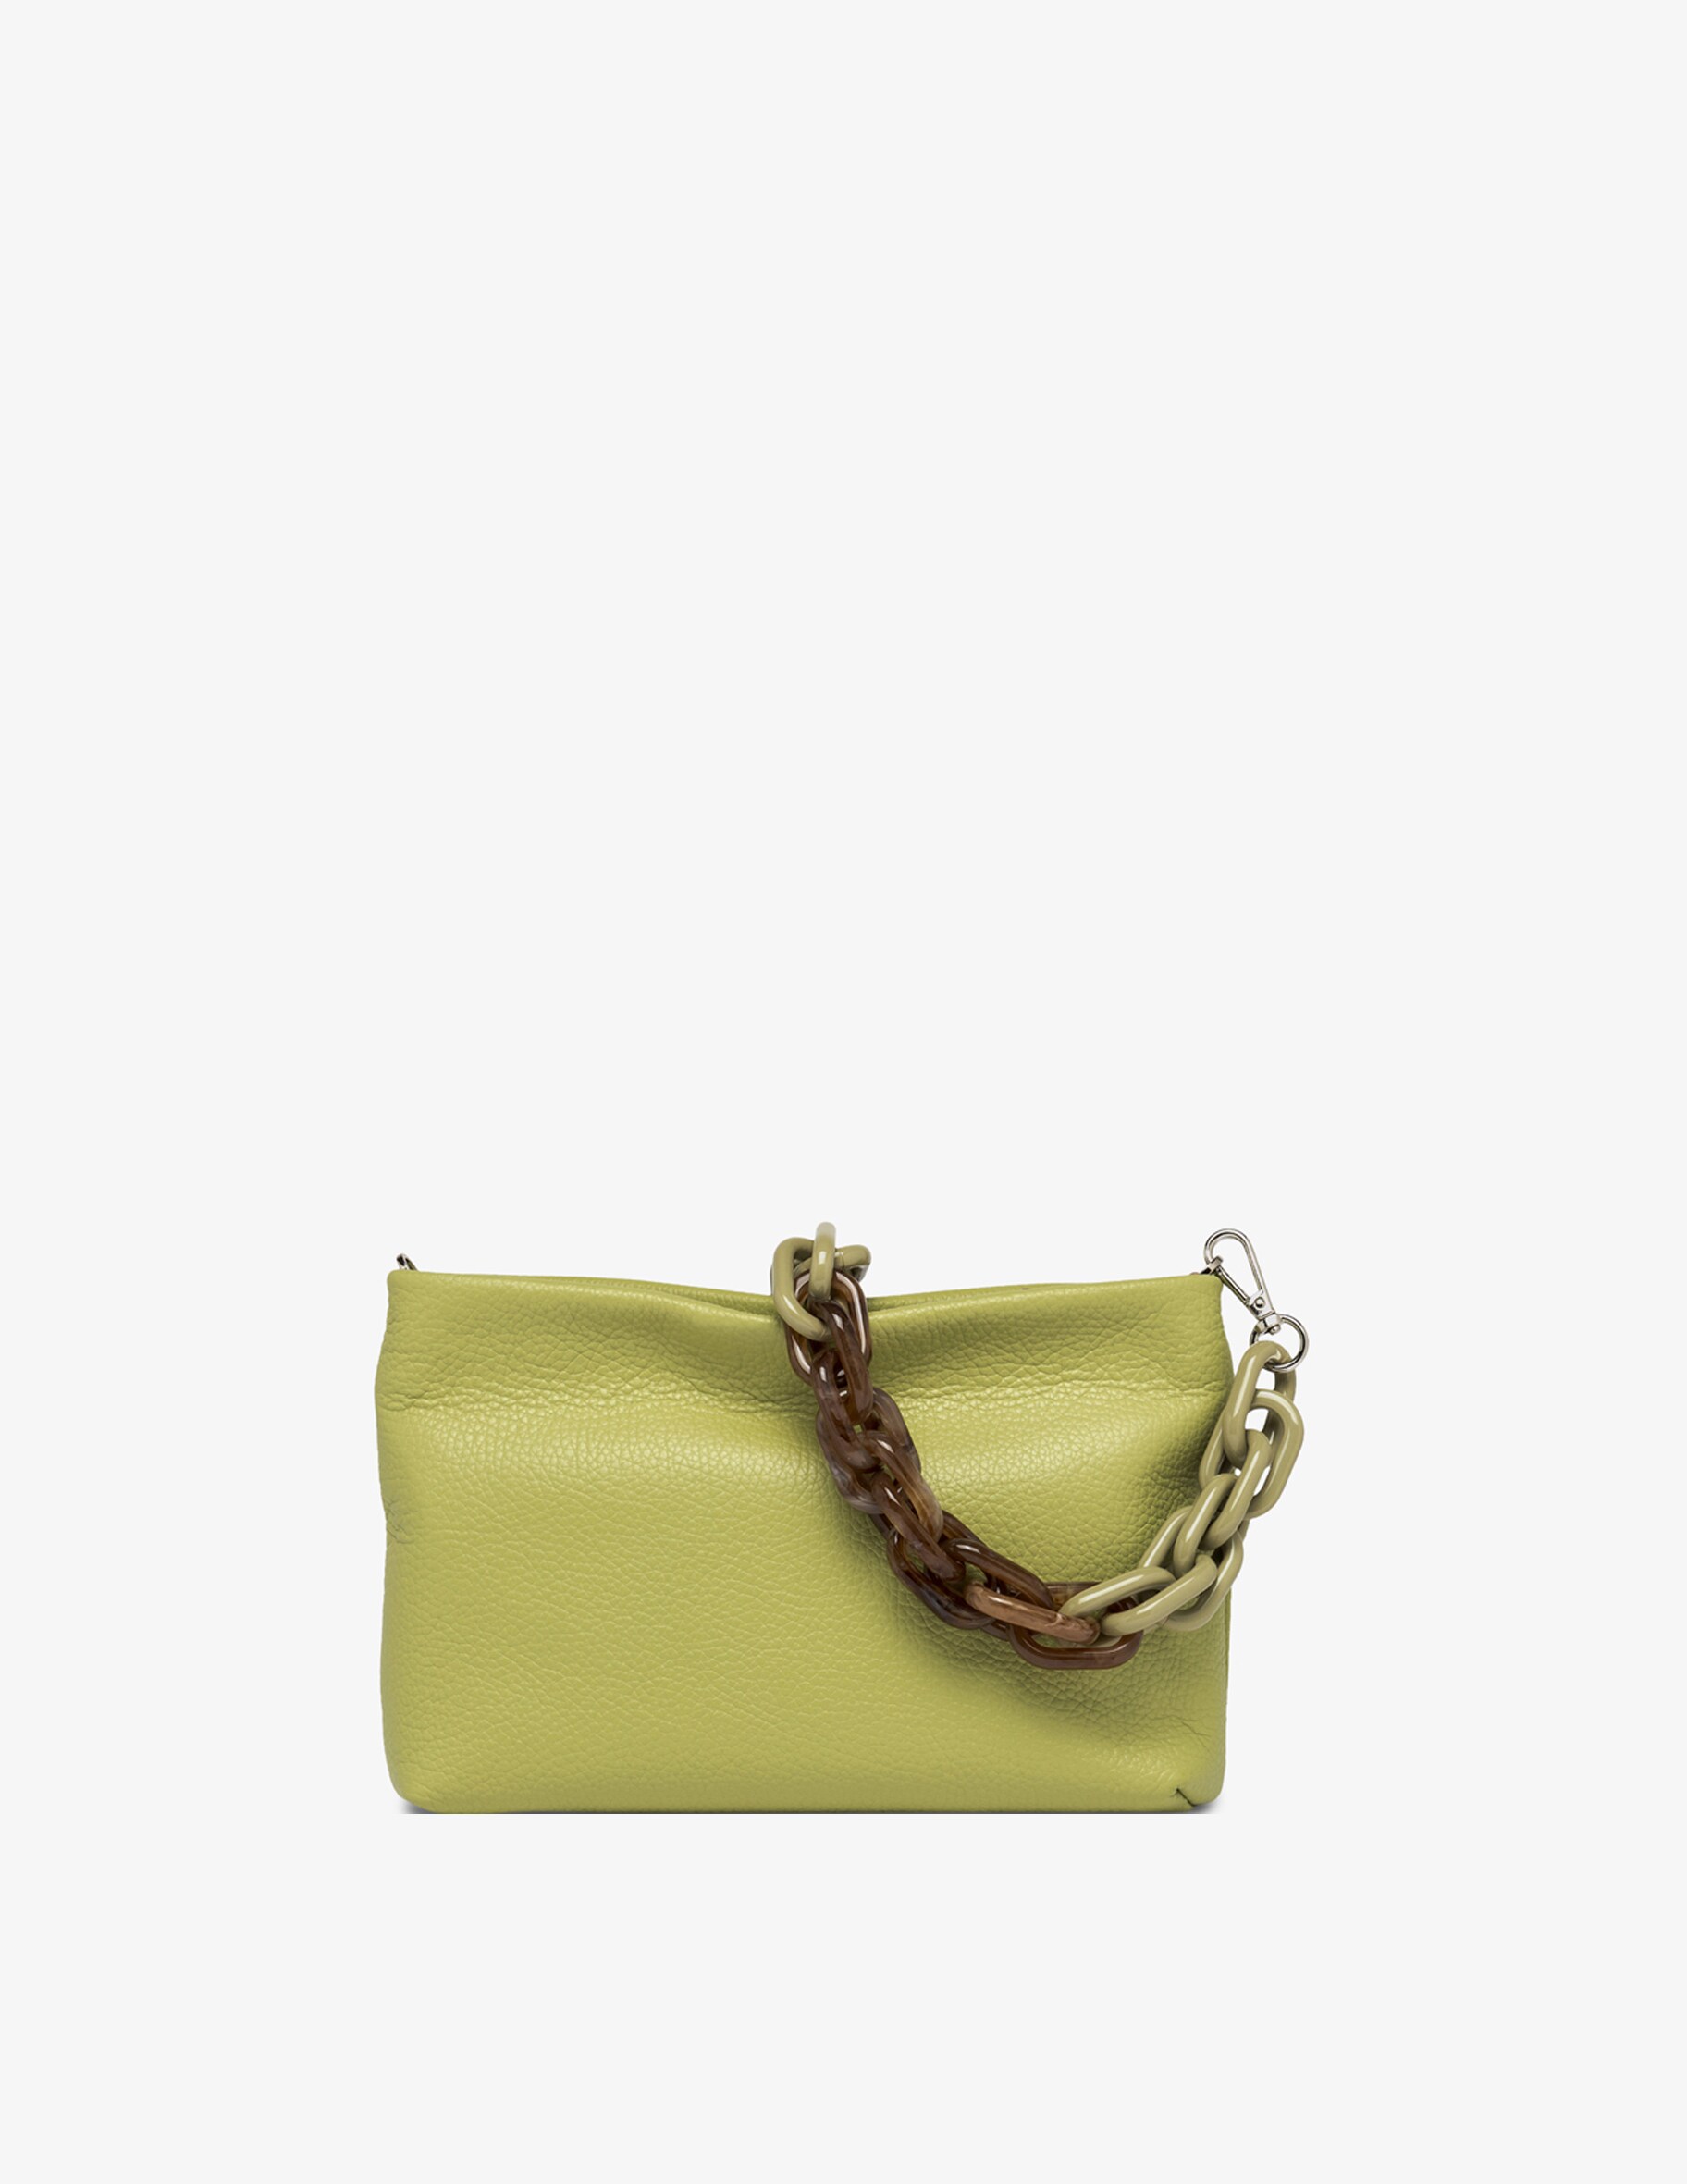 Сумка через плечо Brenda S Gianni Chiarini Firenze, зеленый сумка superlight gianni chiarini цвет natural